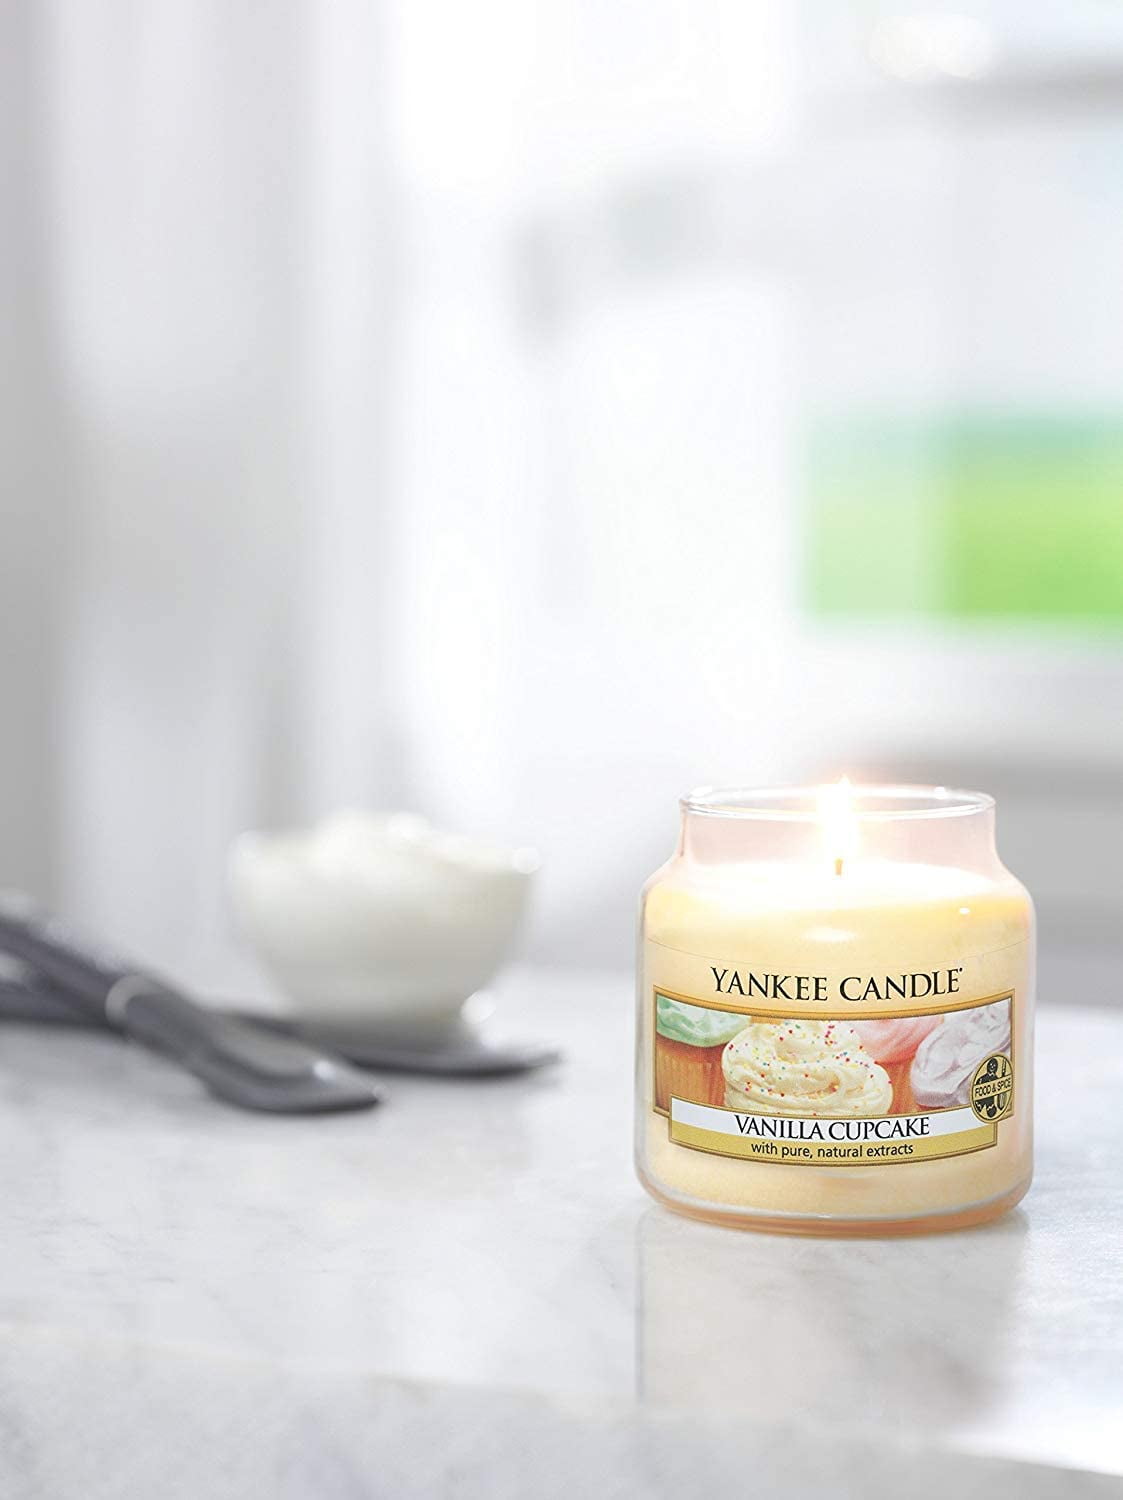 Parfums pour voiture Vanilla Cupcake de Yankee Candle ❤️ Acheter